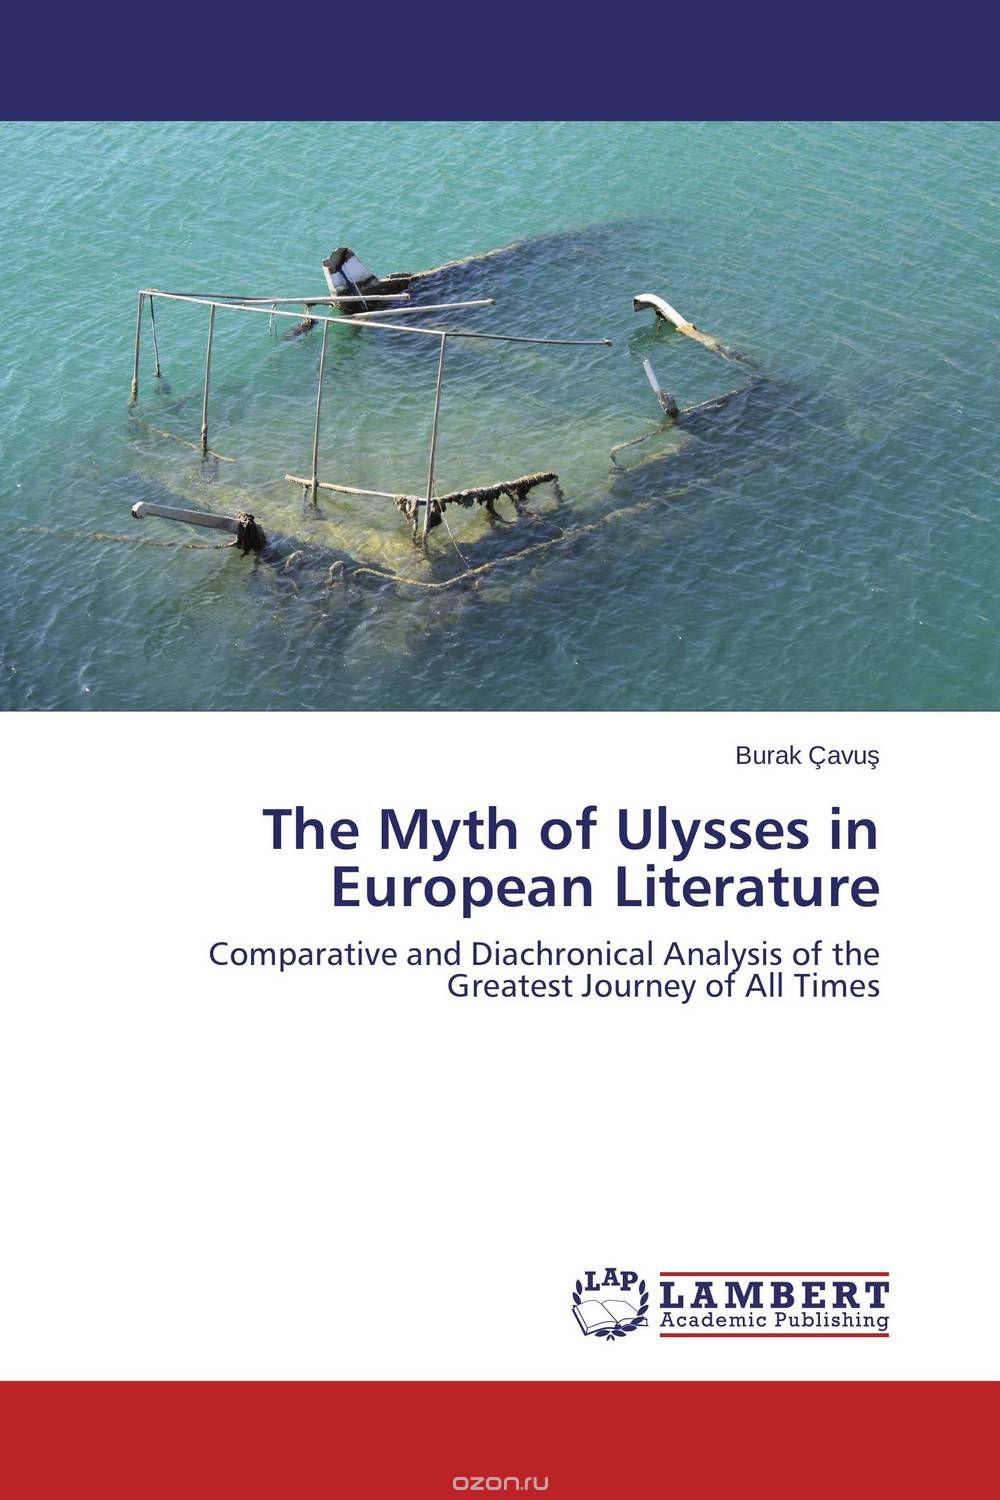 Скачать книгу "The Myth of Ulysses in European Literature"